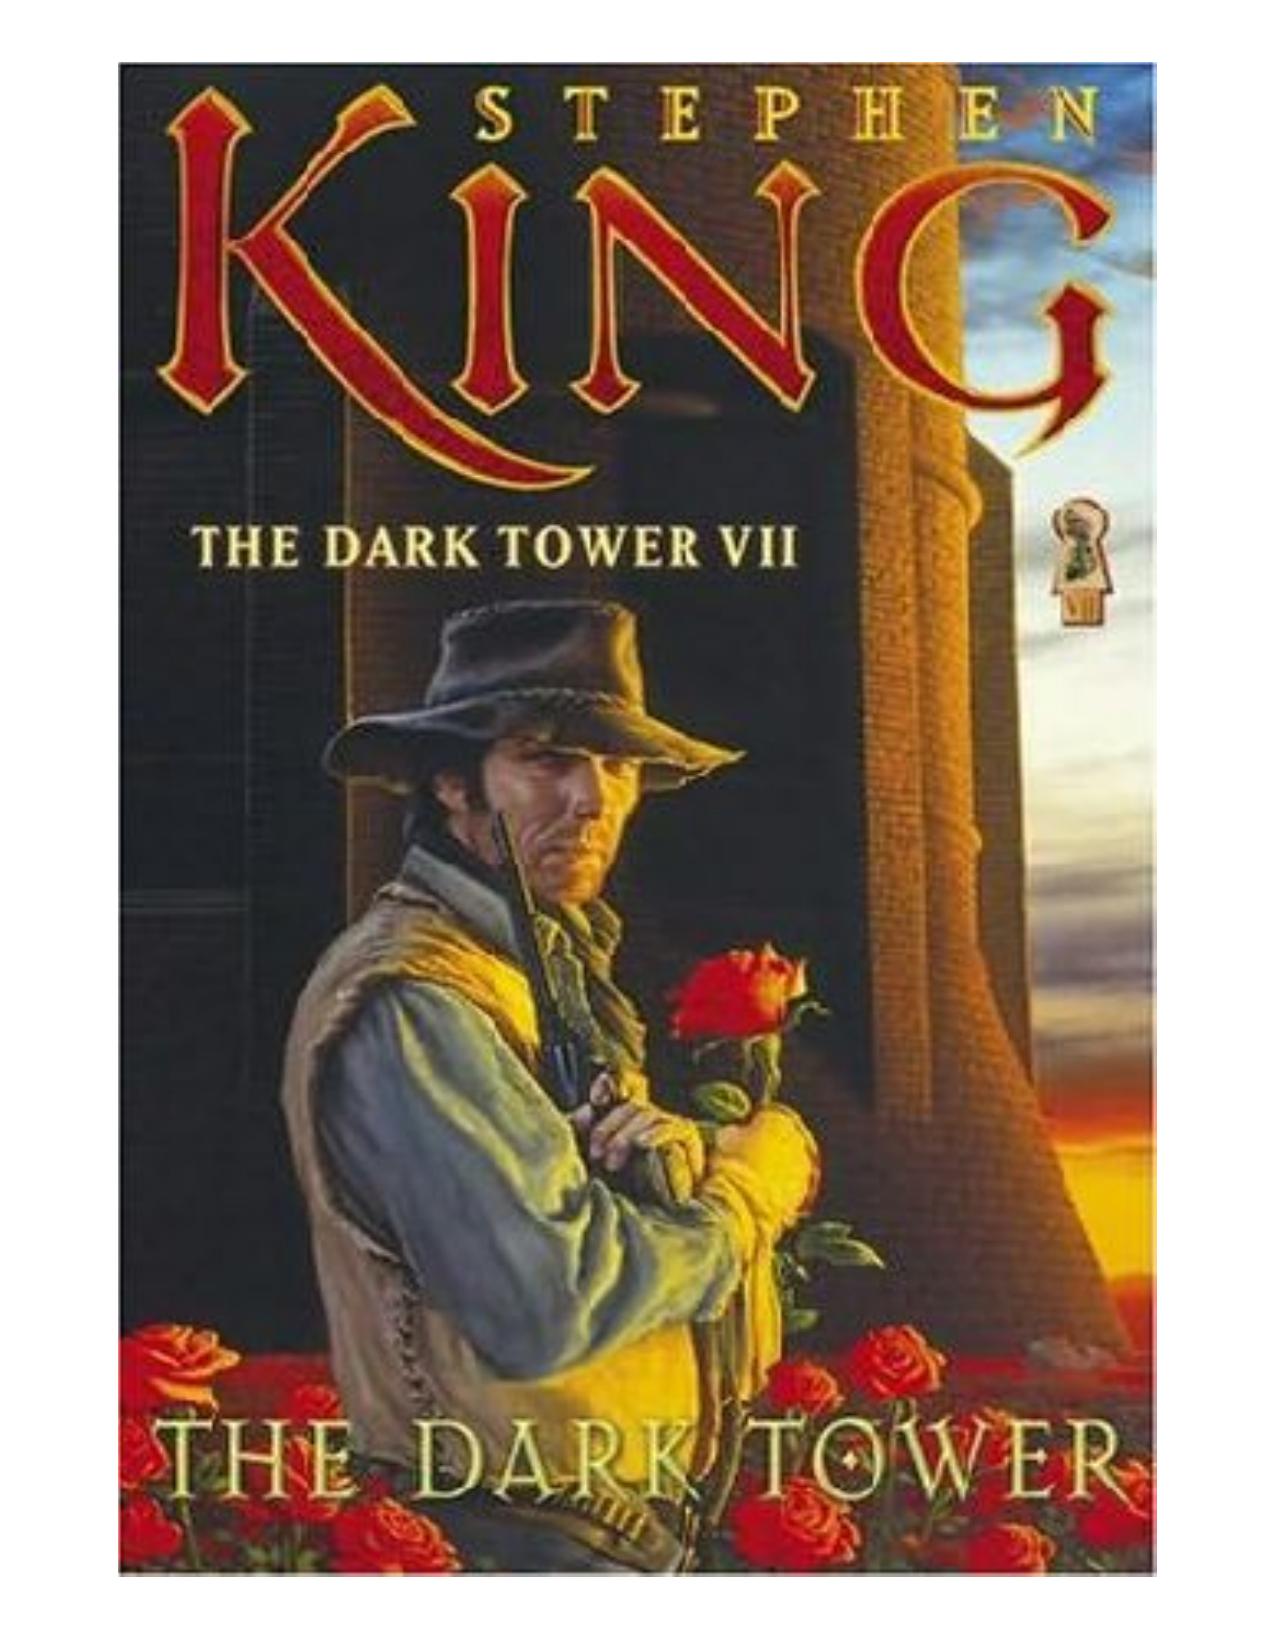 King, Stephen - The Dark Tower VII by King Stephen